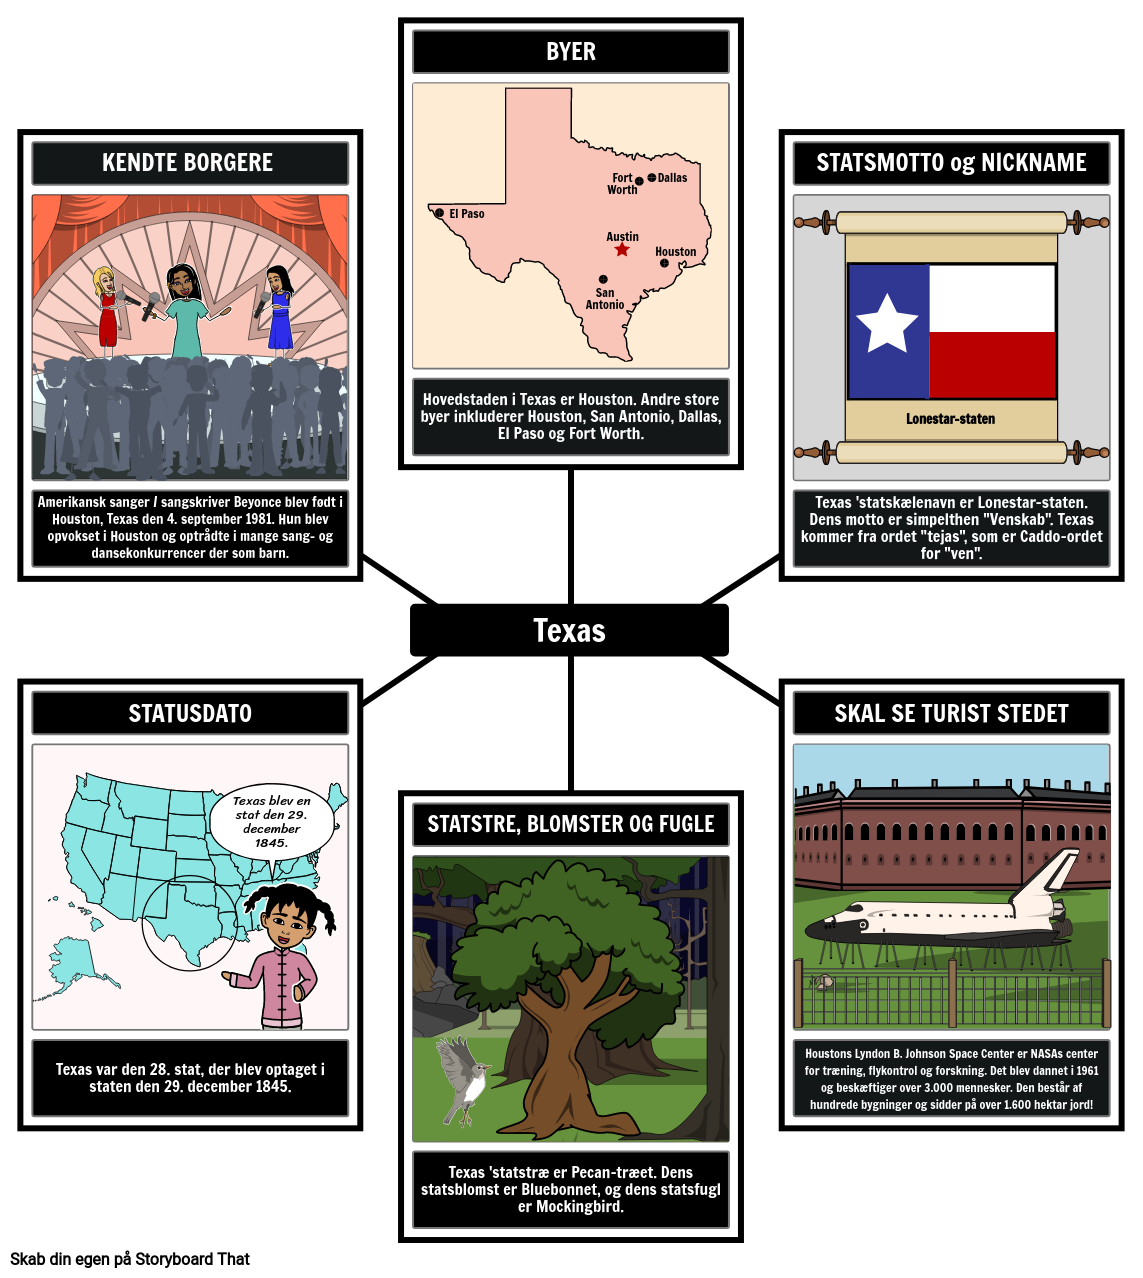 Texas State Fakta og Informationsaktivitet